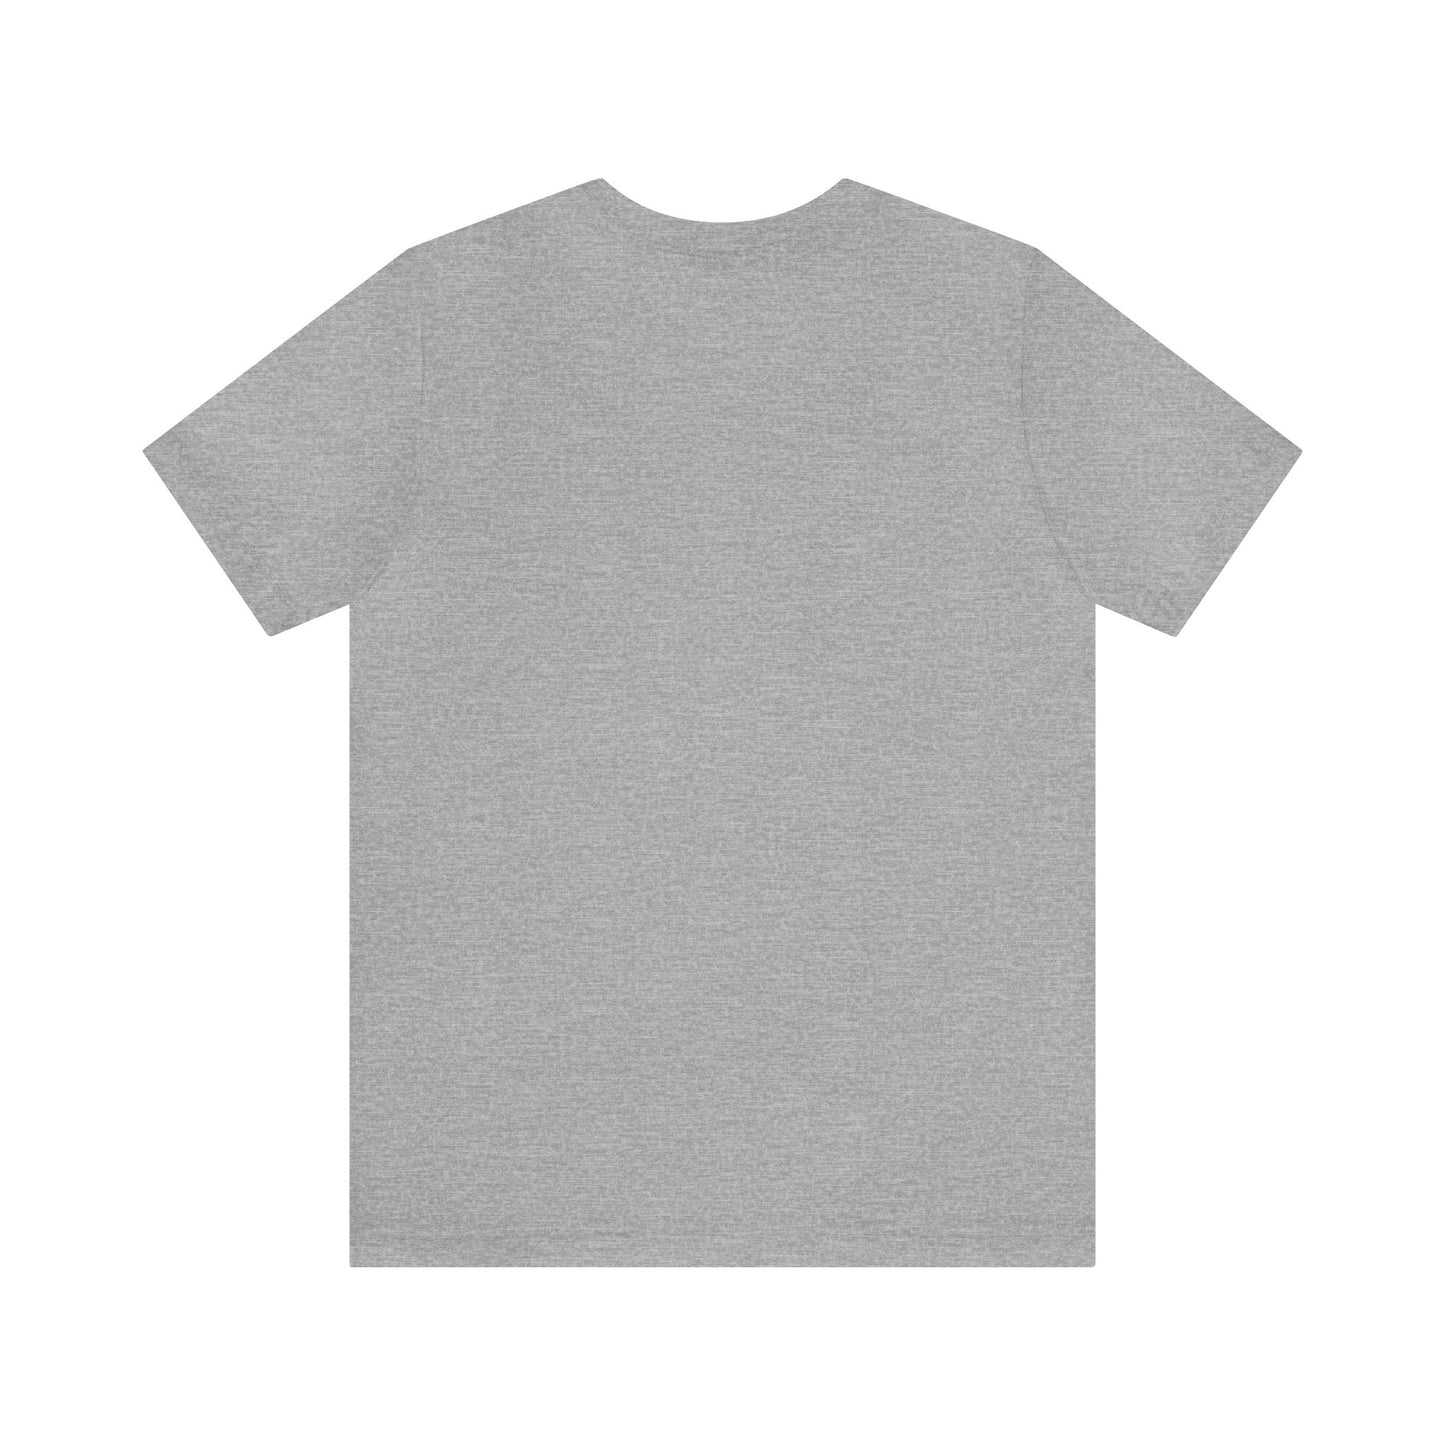 T-Shirt Tshirt Gift for Friends and Family Short Sleeve T Shirt Anniversary Petrova Designs